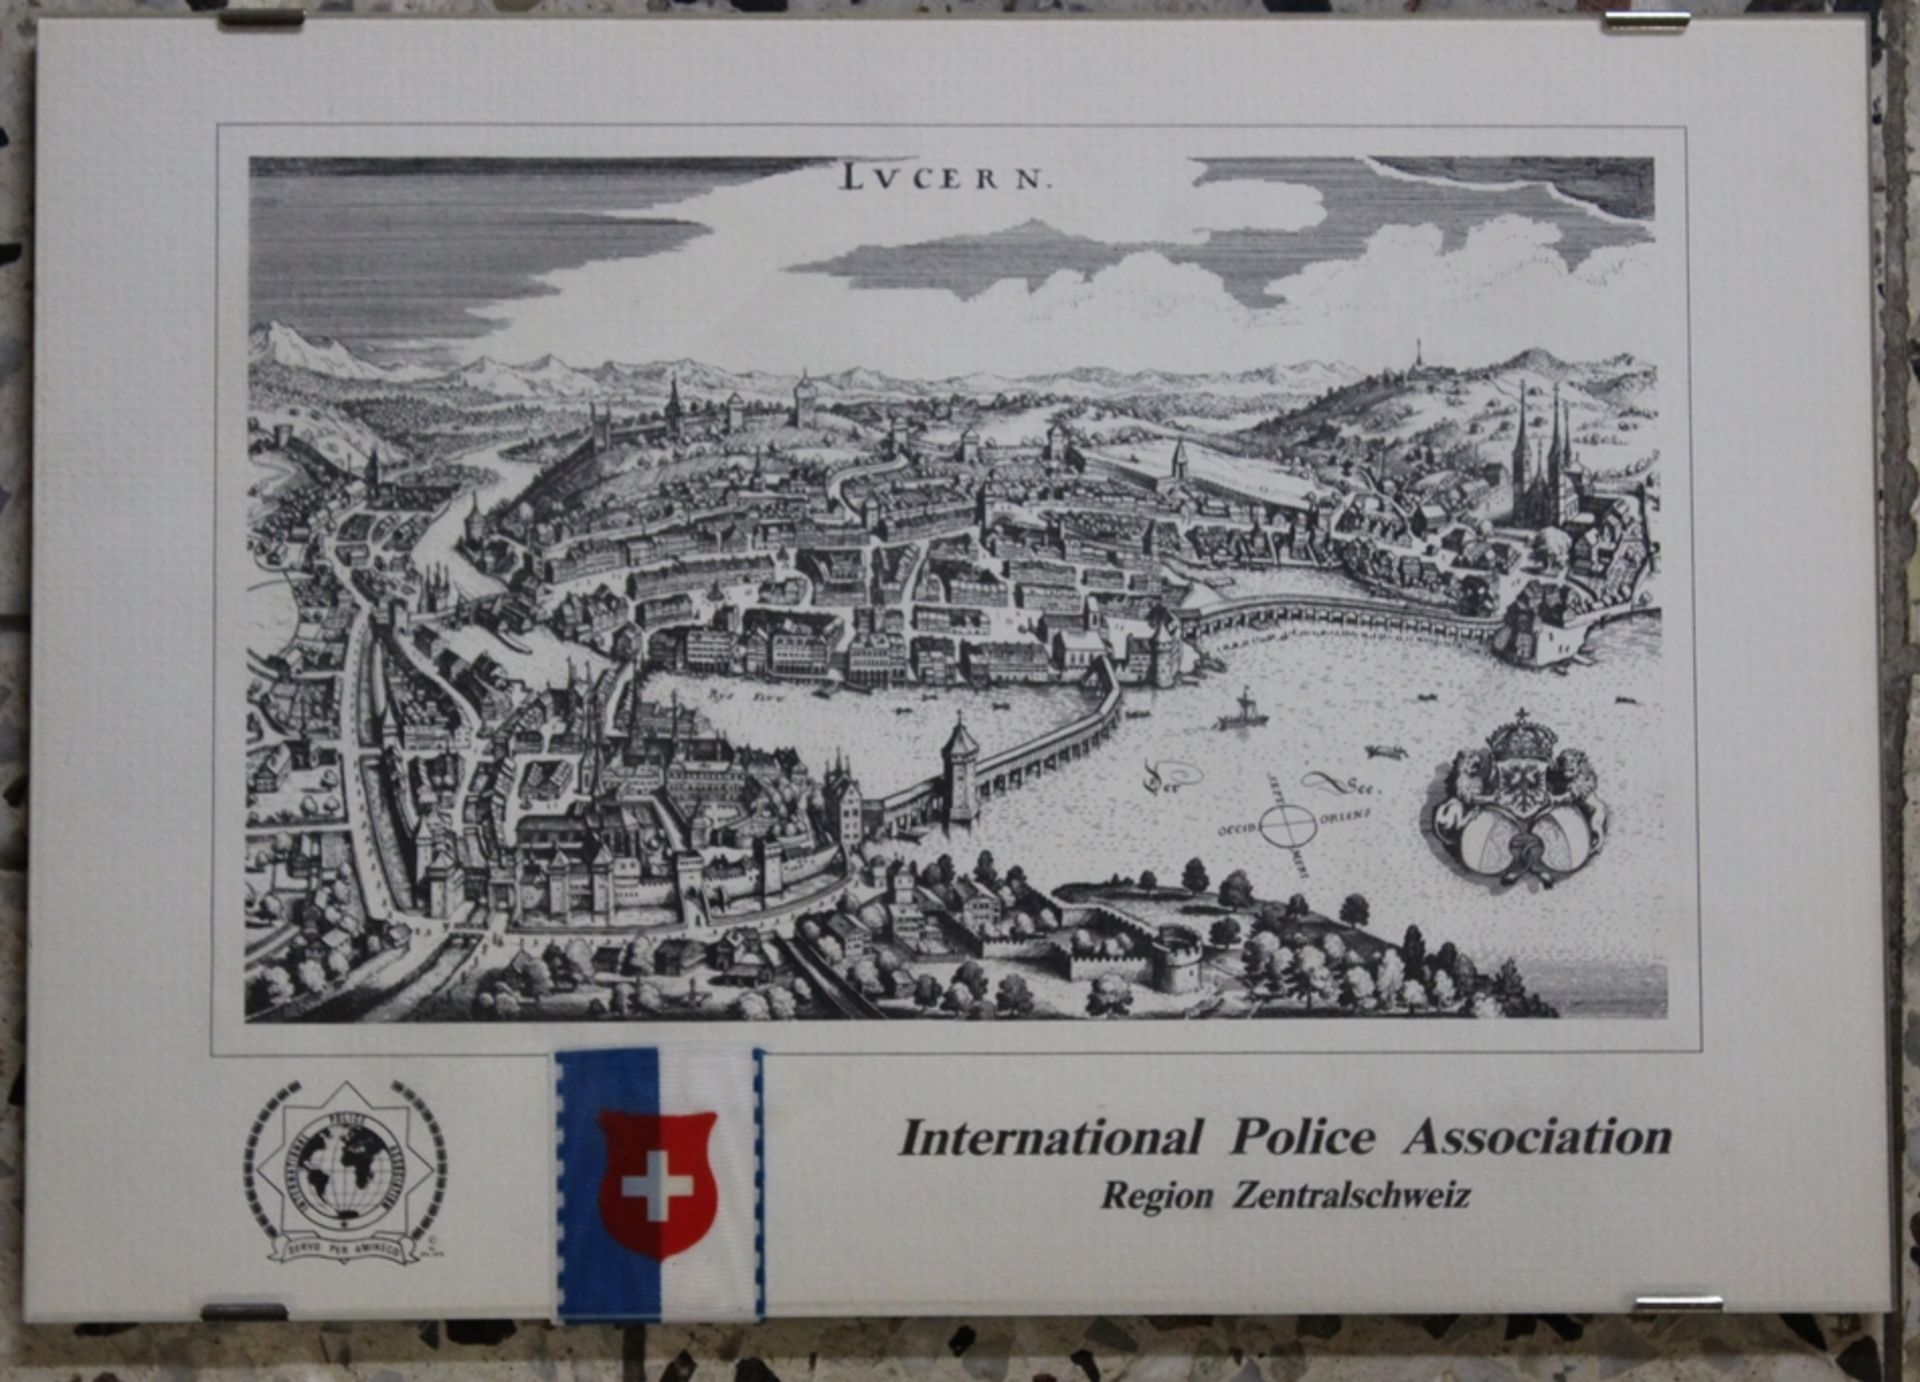 Grafik, Luzern, International Police Association Region Zentral Schweiz, ger./Glas, RG 21 x 29,9cm. - Image 2 of 4